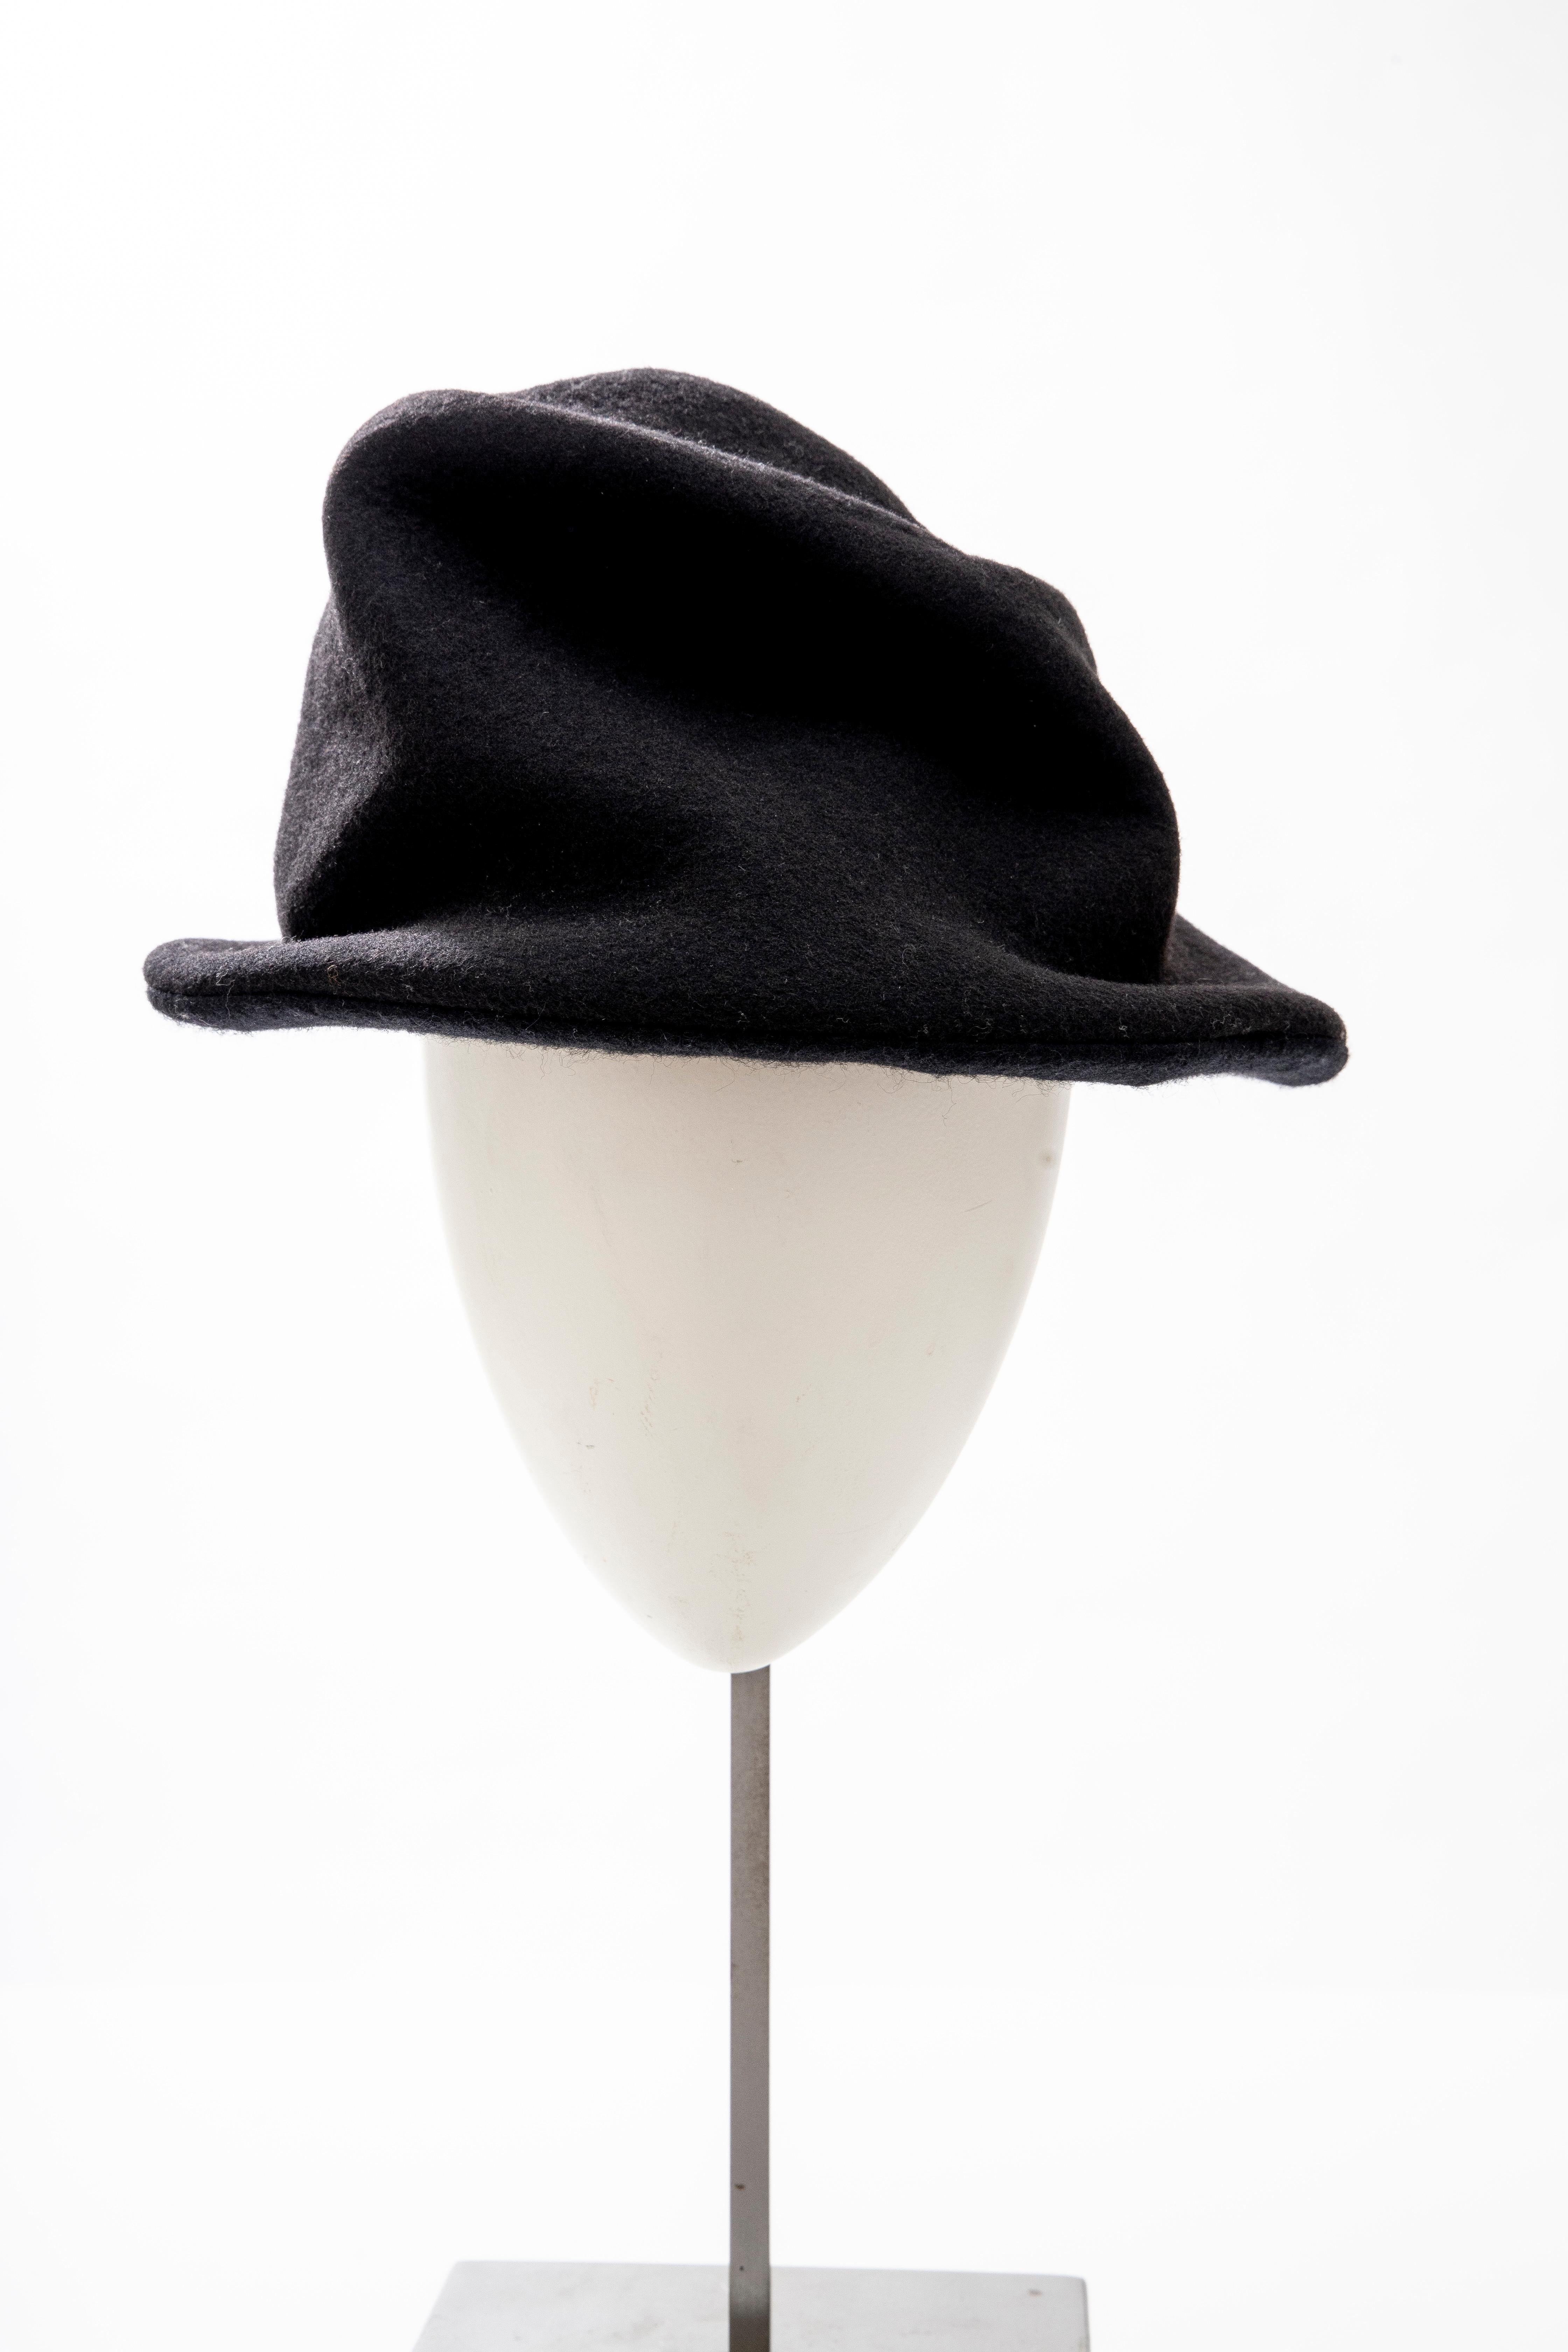 Yohji Yamamoto Black Asymmetrical Felted Wool Hat 6